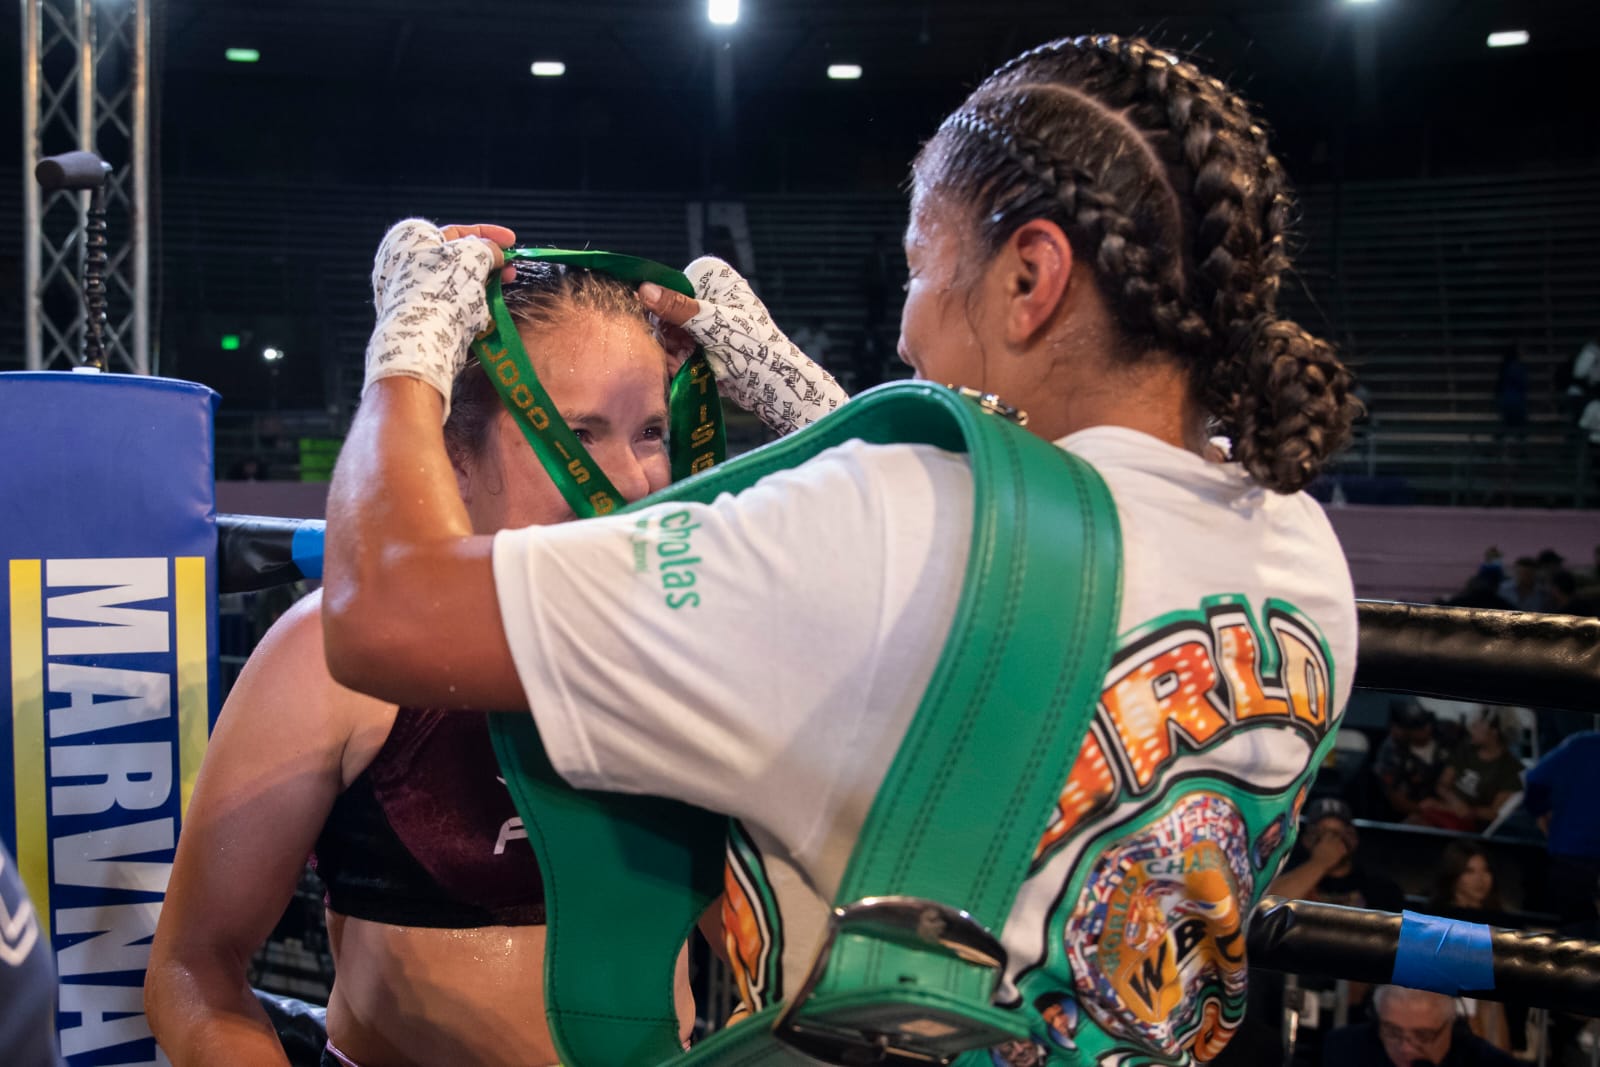 Adelaida Ruiz defeats Nancy Franco De Alba for WBC Silver Title | Boxen247.com (Kristian von Sponneck)